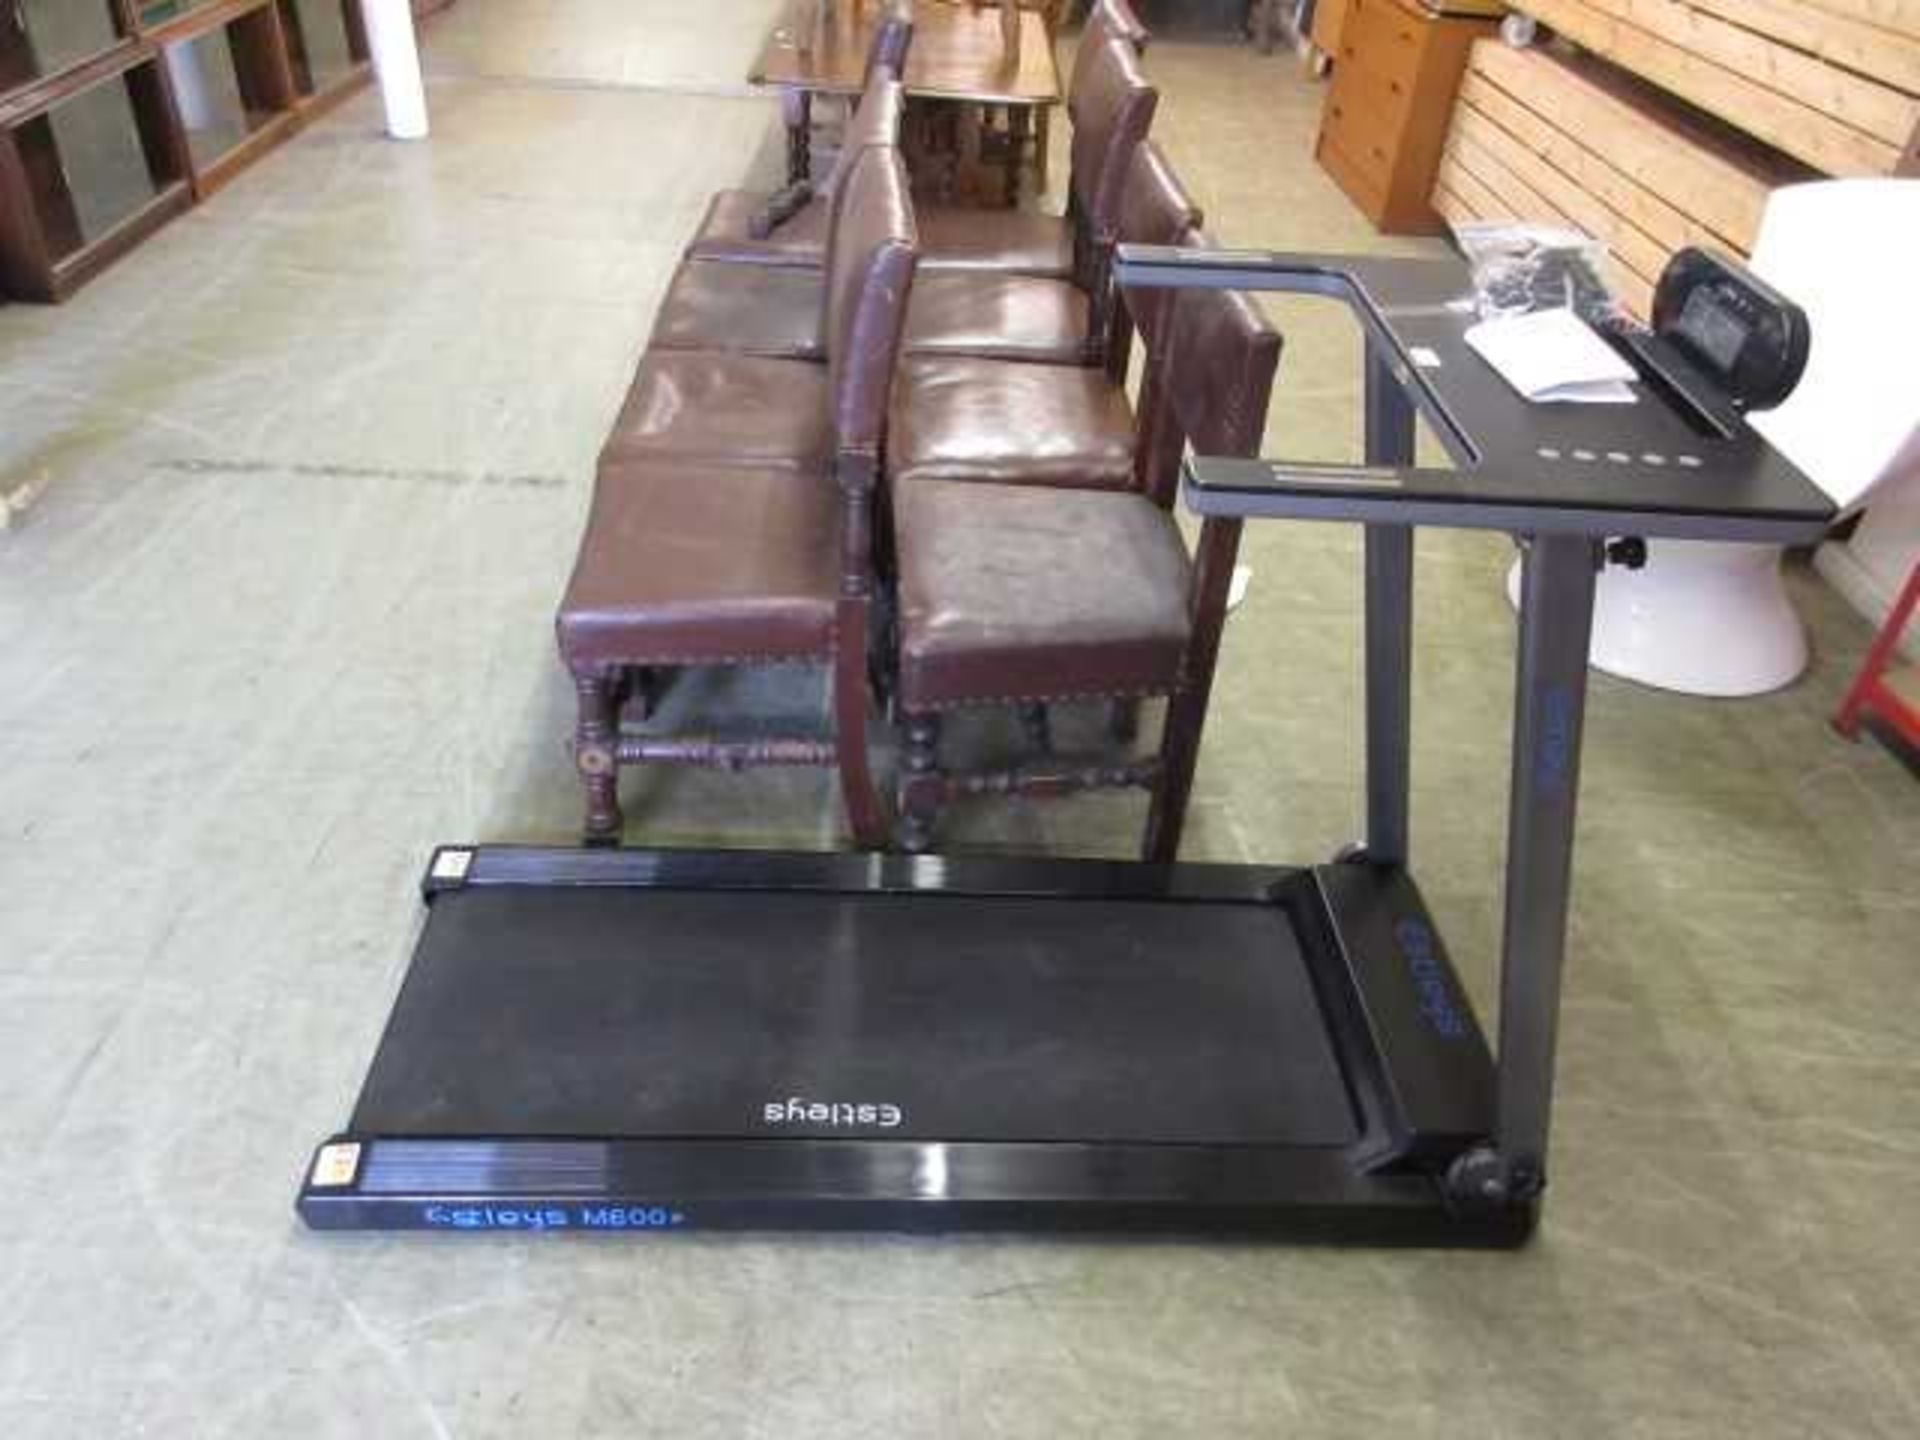 An Estley's motorized treadmill M600+